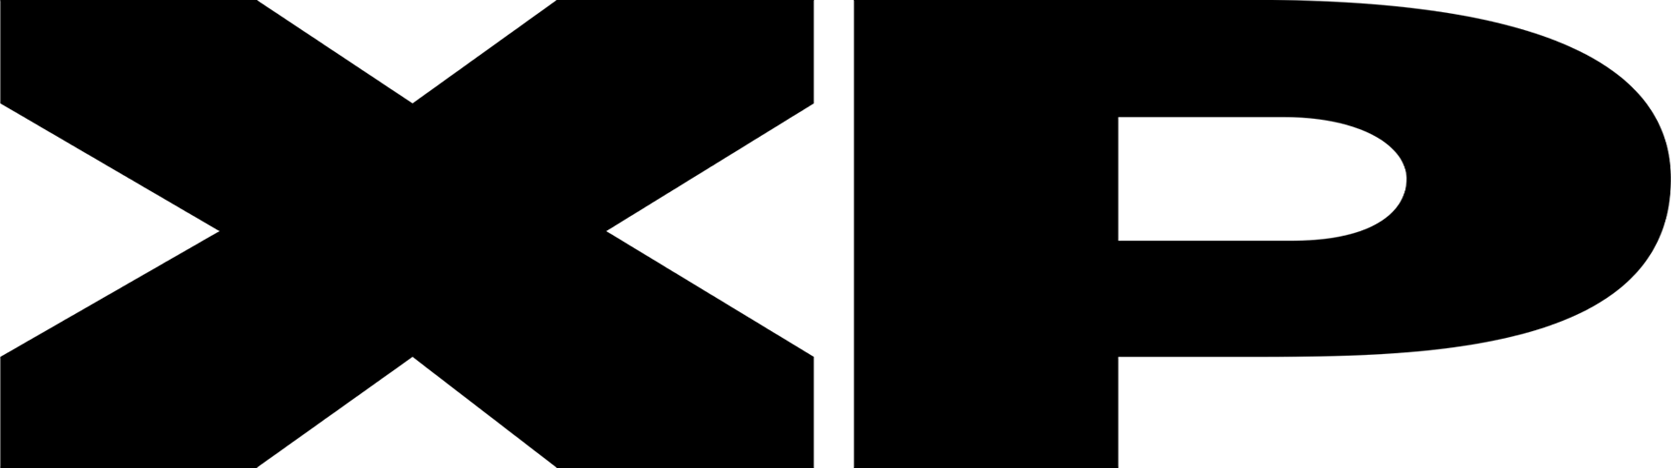 XP Logo Stretched Black